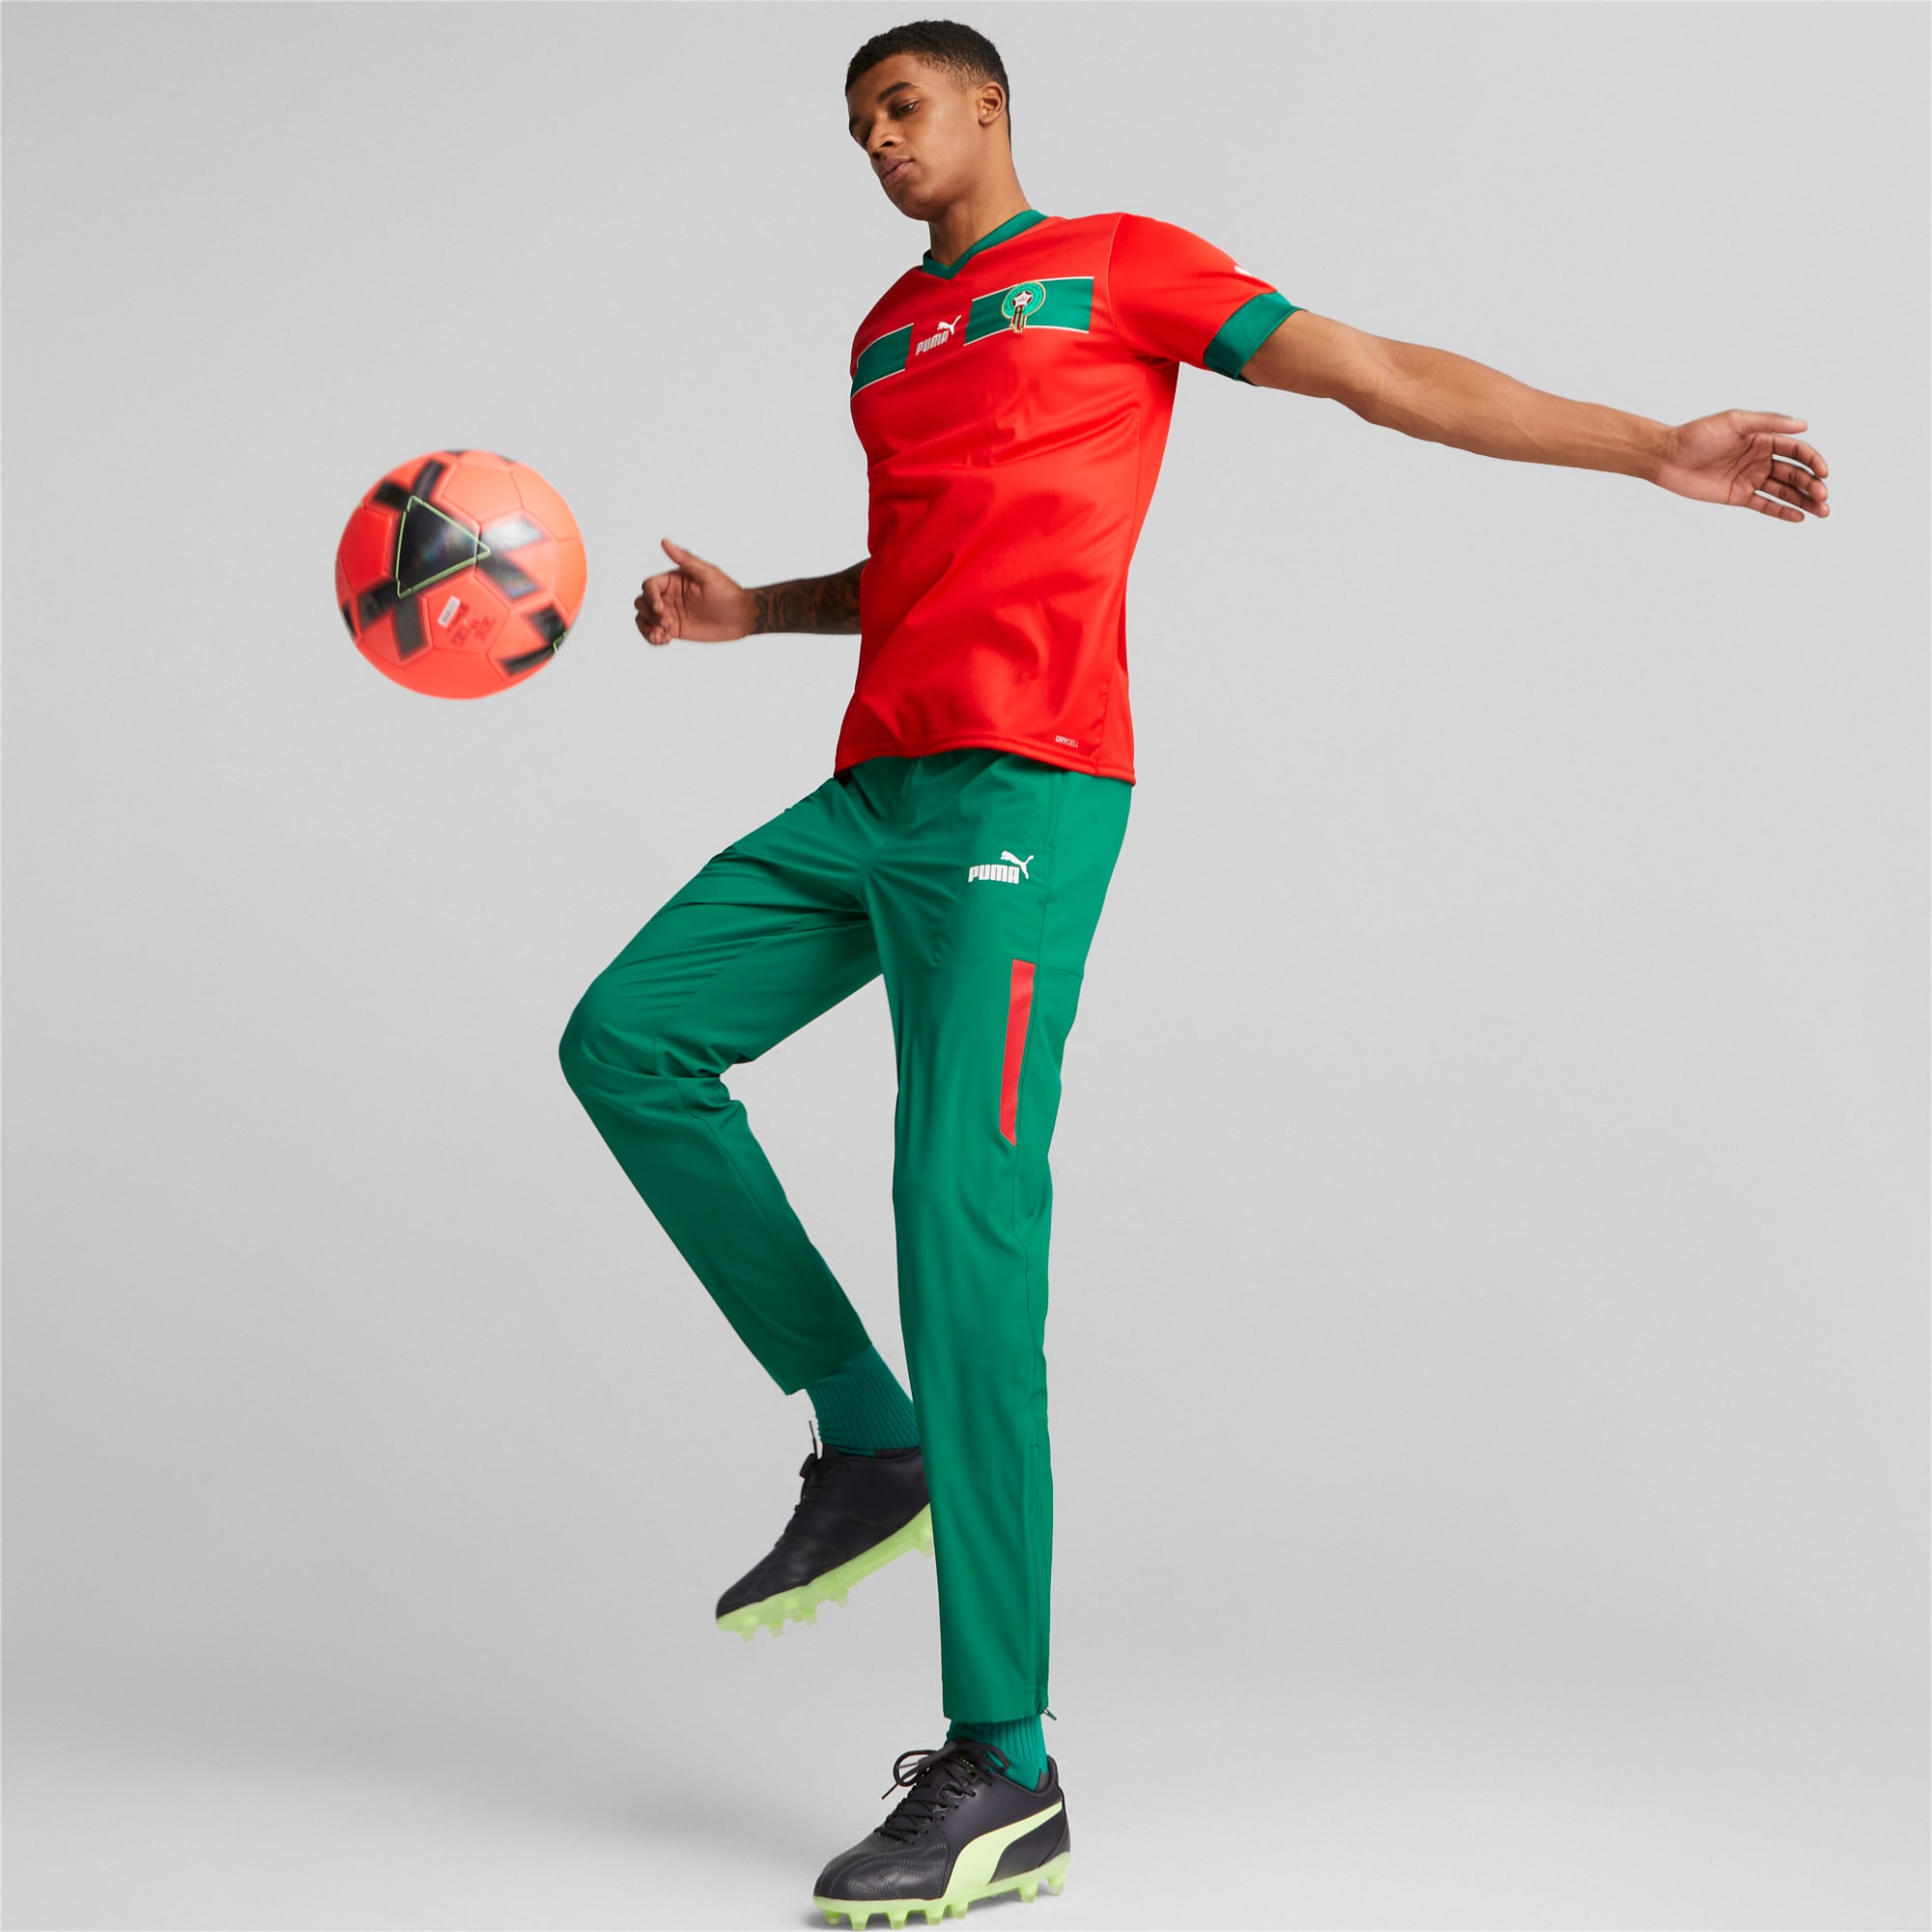 PUMA Federation Royale Marocaine De Football Red Jacket Size XL Men’s